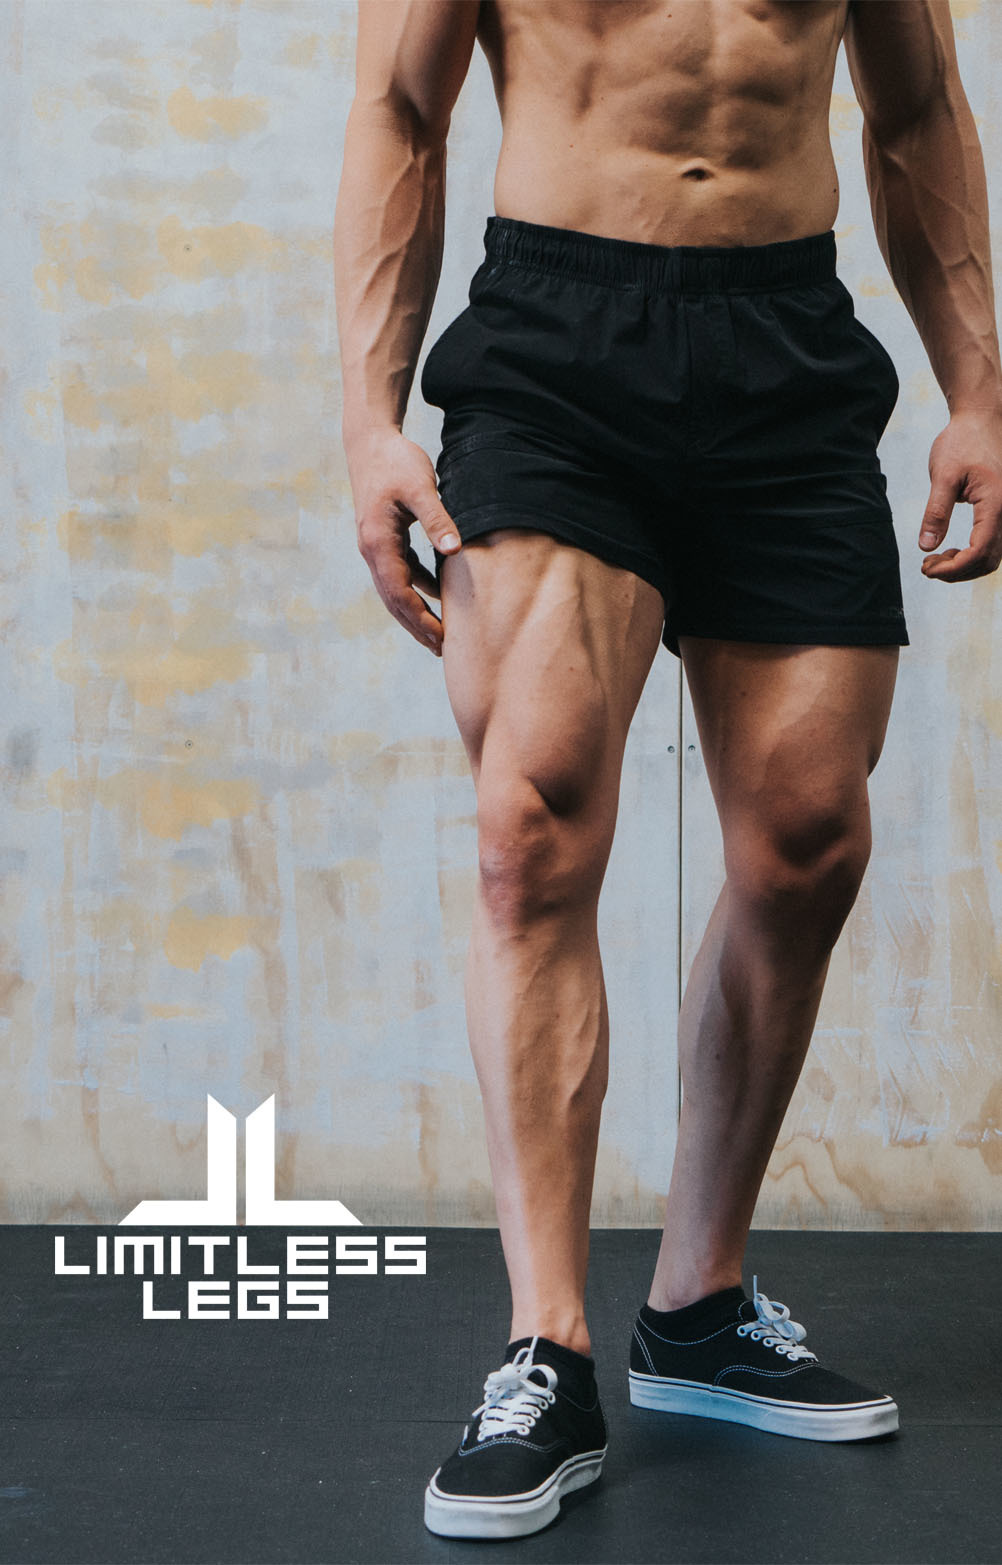 Limitless Legs - FitnessFAQs